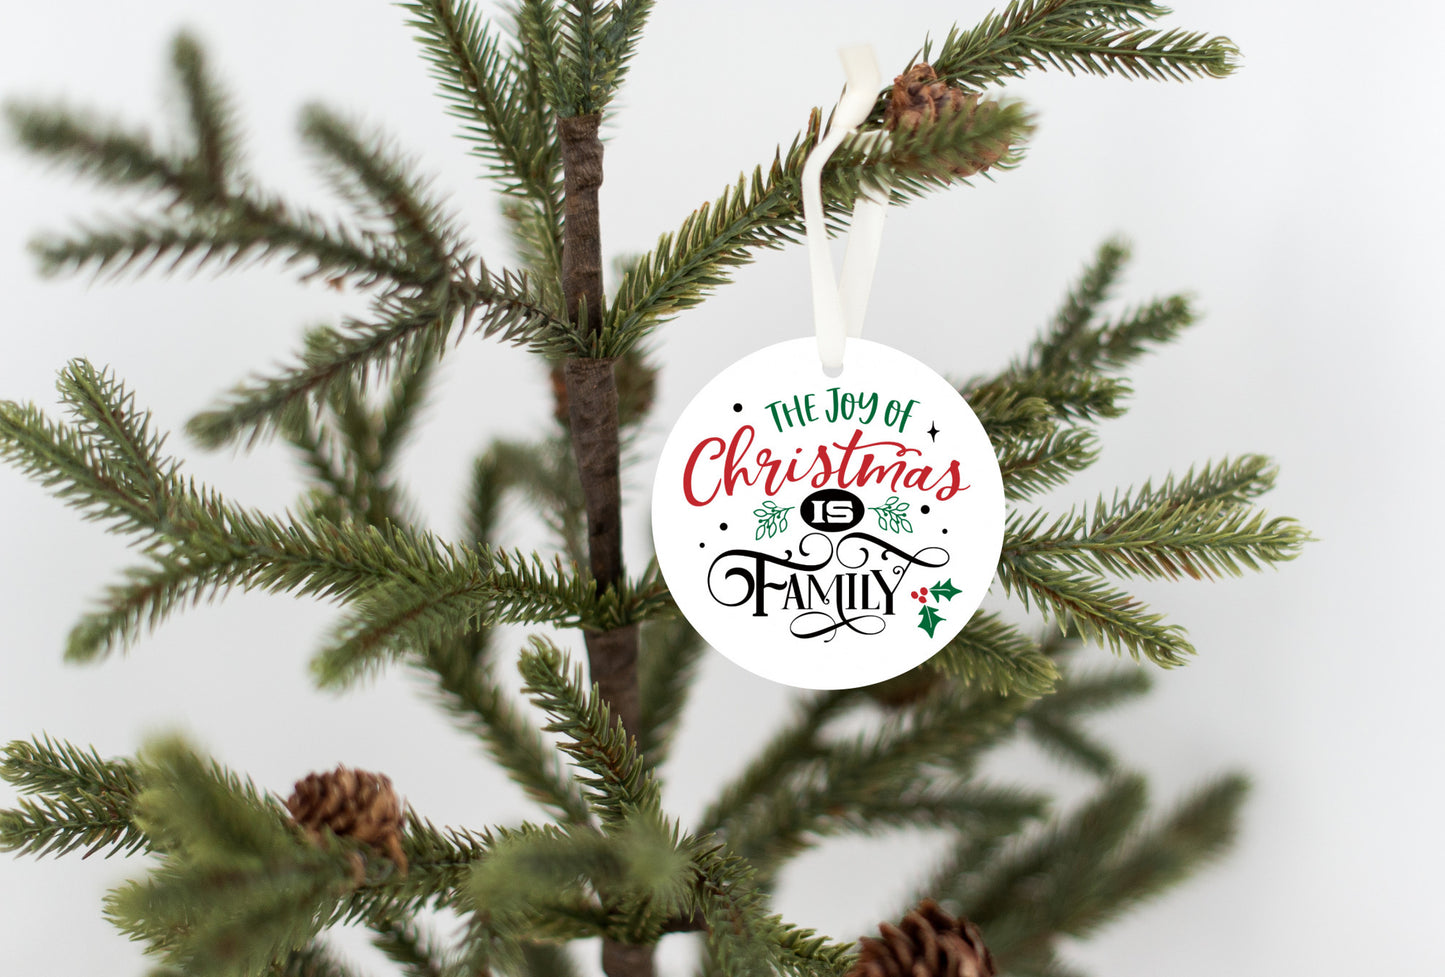 The Joy of Christmas is Family - Christmas Ornament